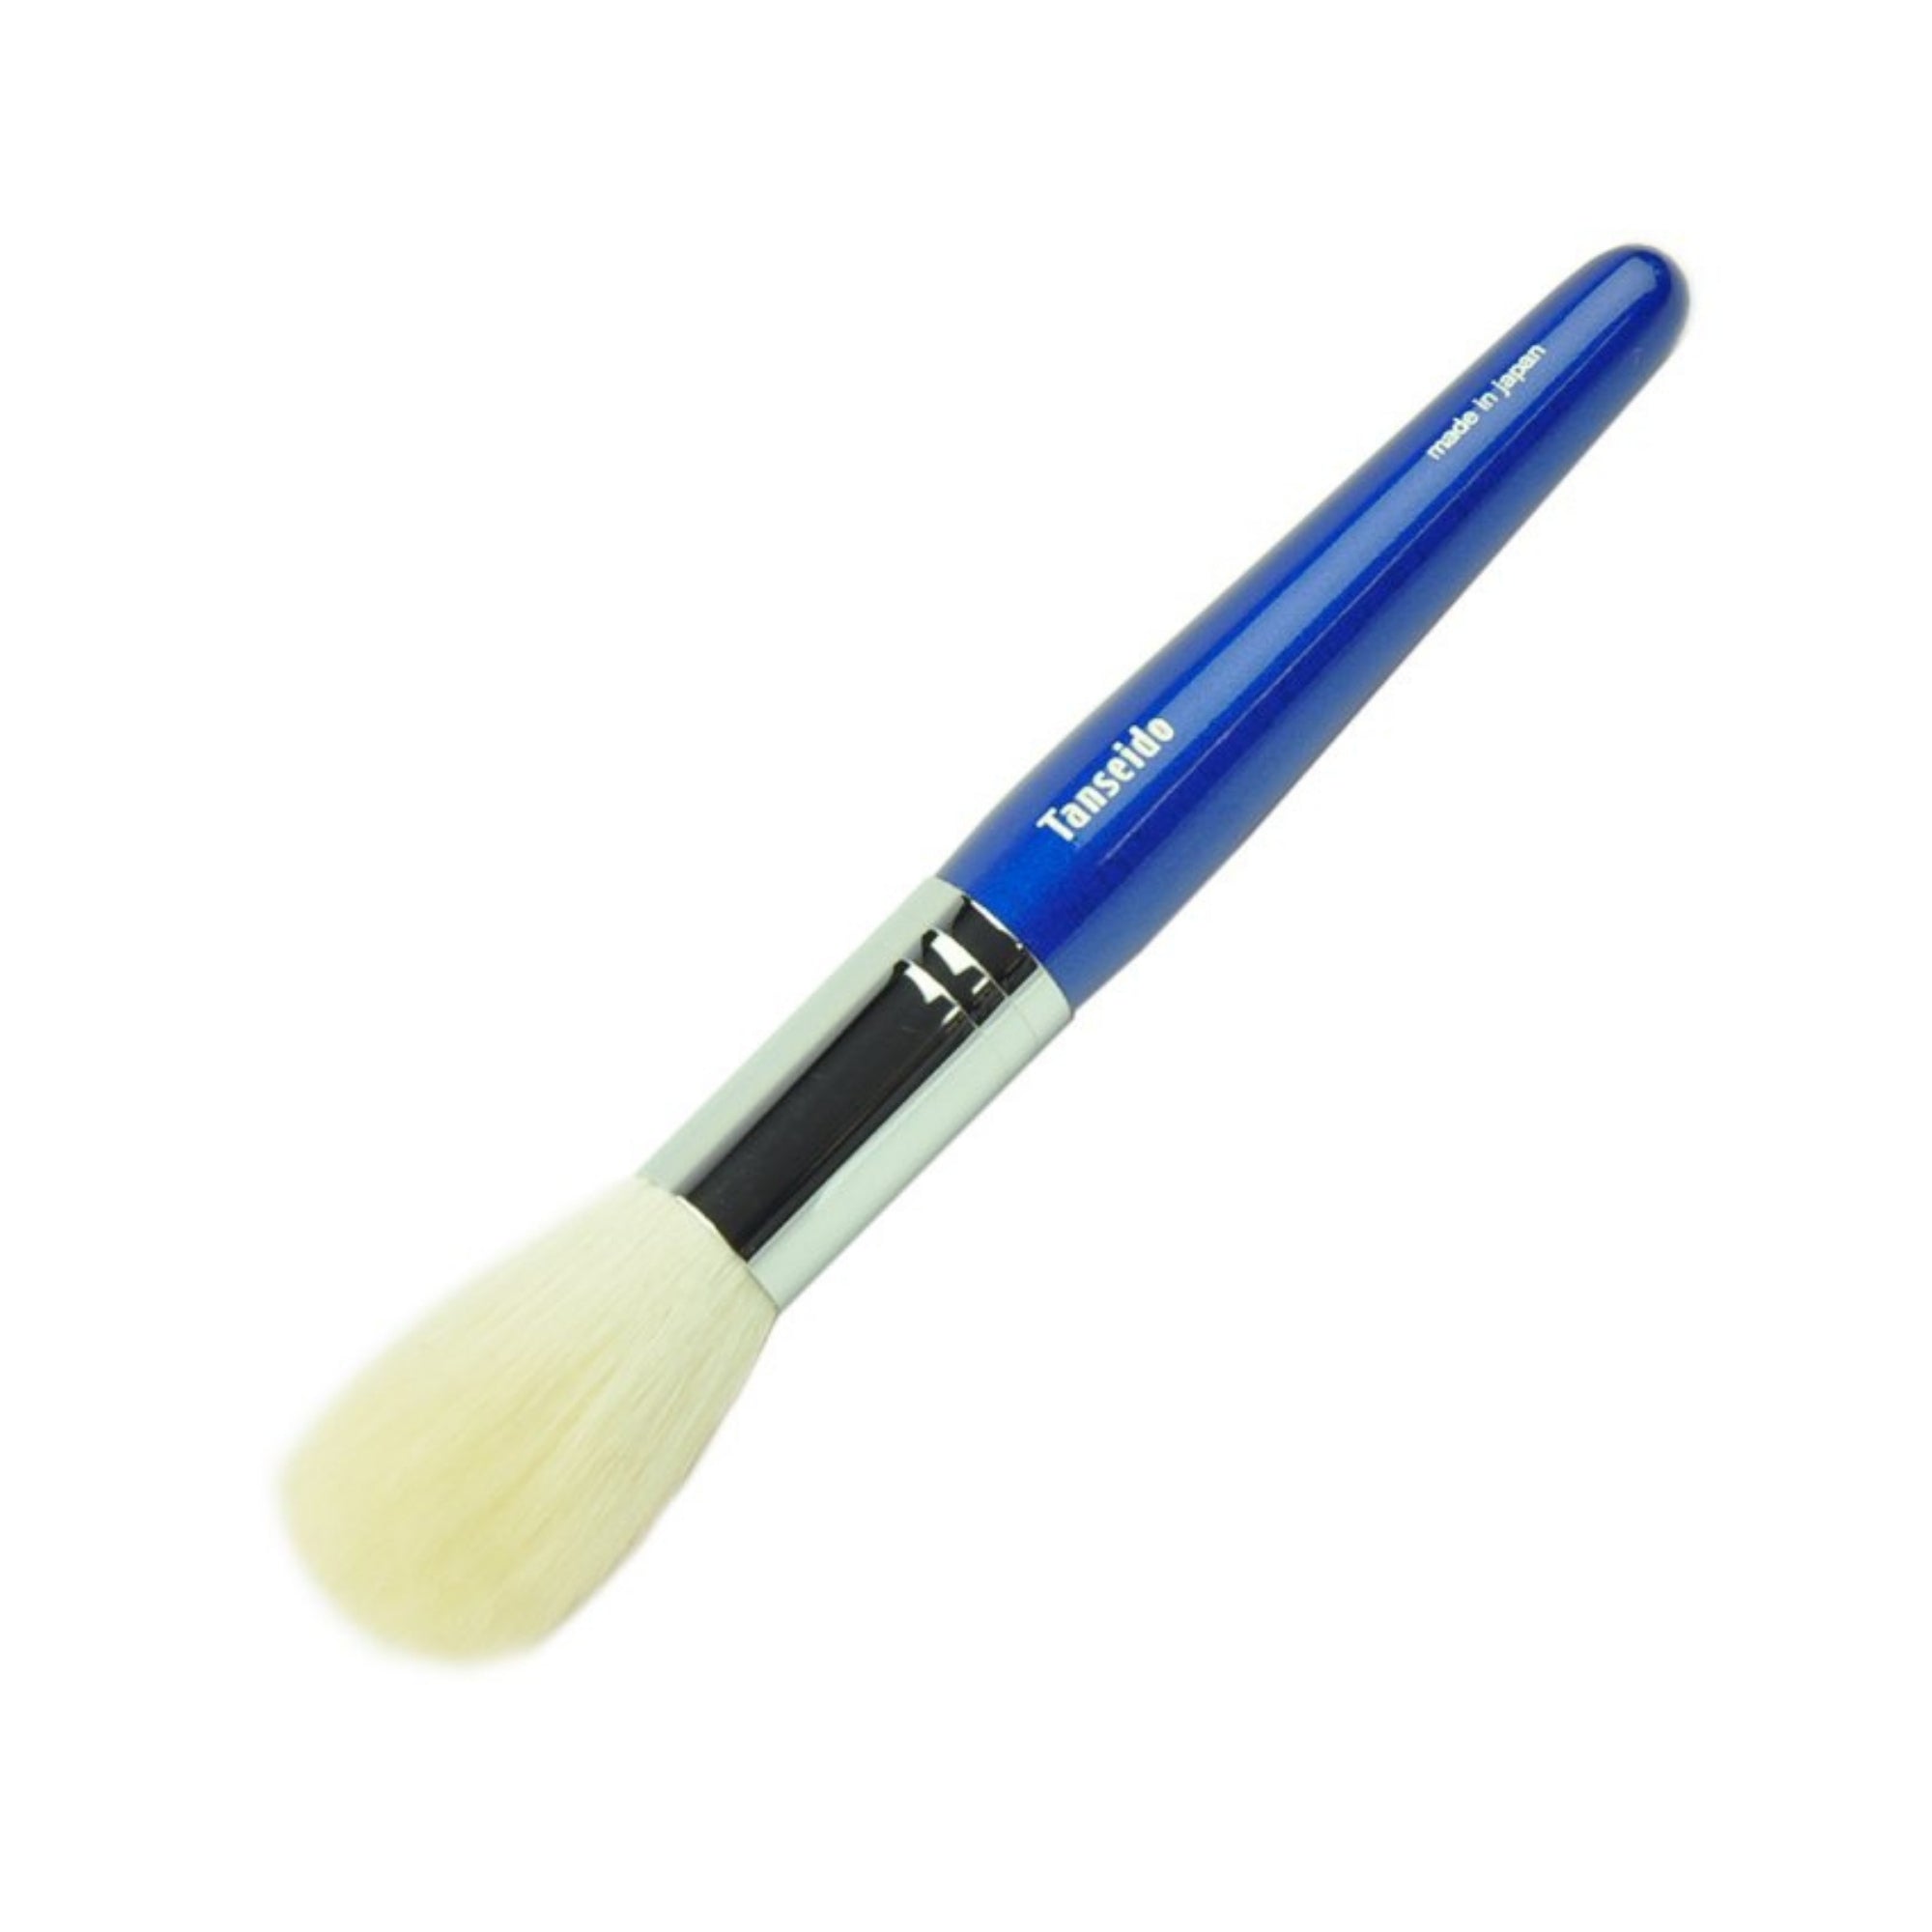 Tanseido WC20 Cheek Brush - Fude Beauty, Japanese Makeup Brushes